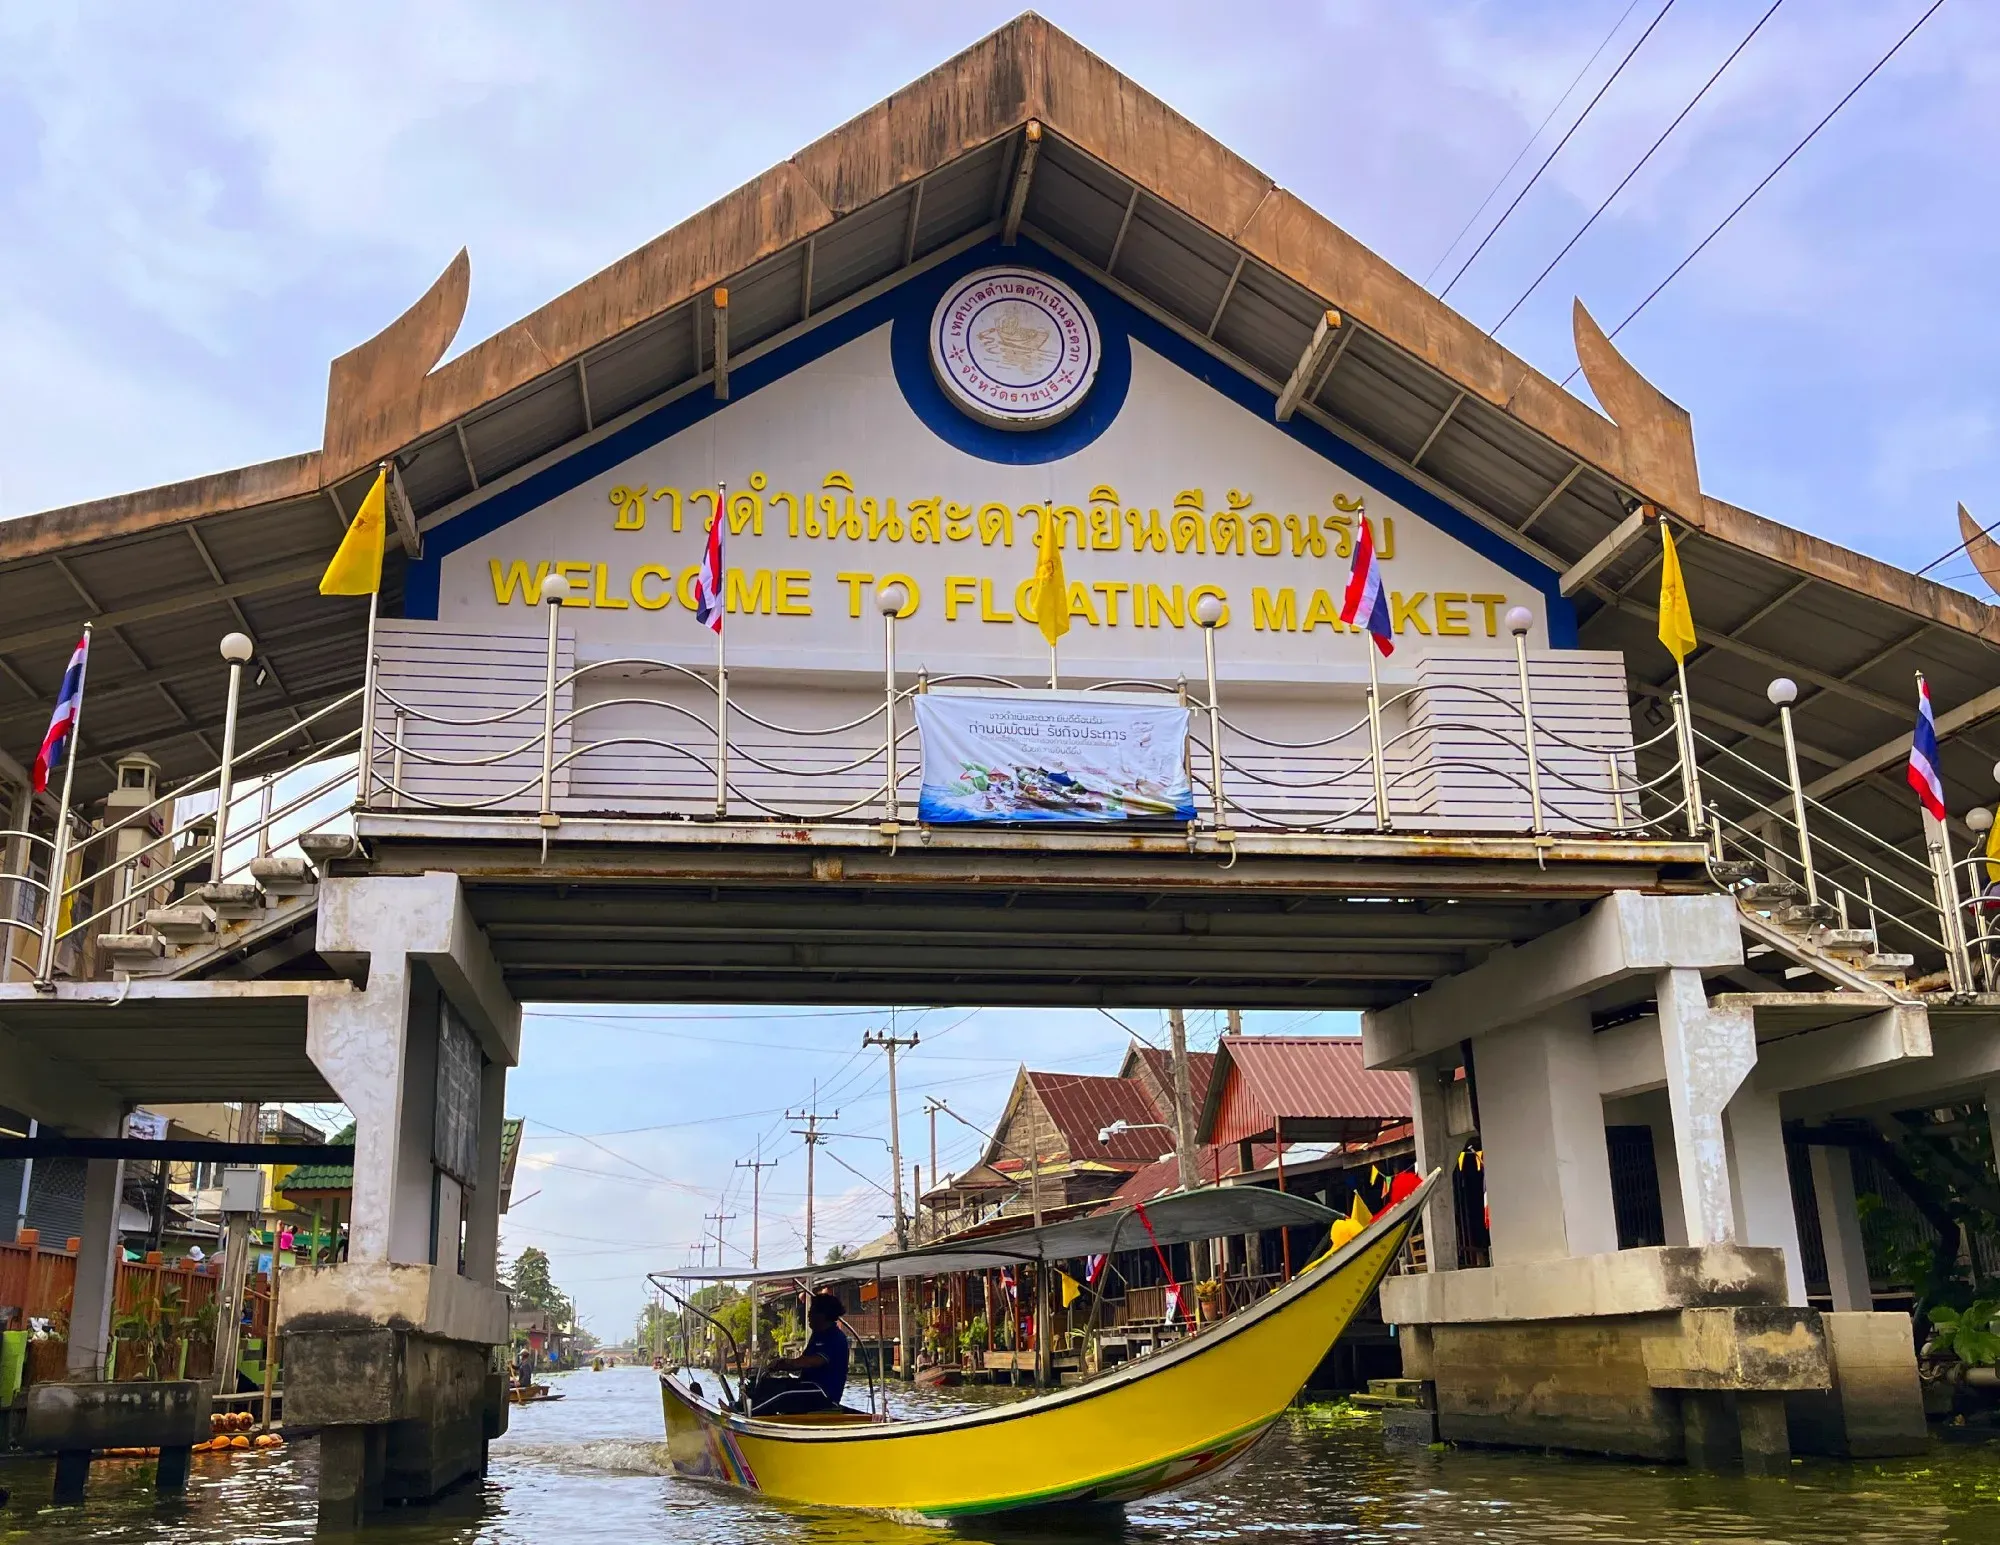 Yellow motor boat foating under walking bridge indicating the entrance to the Floating Market